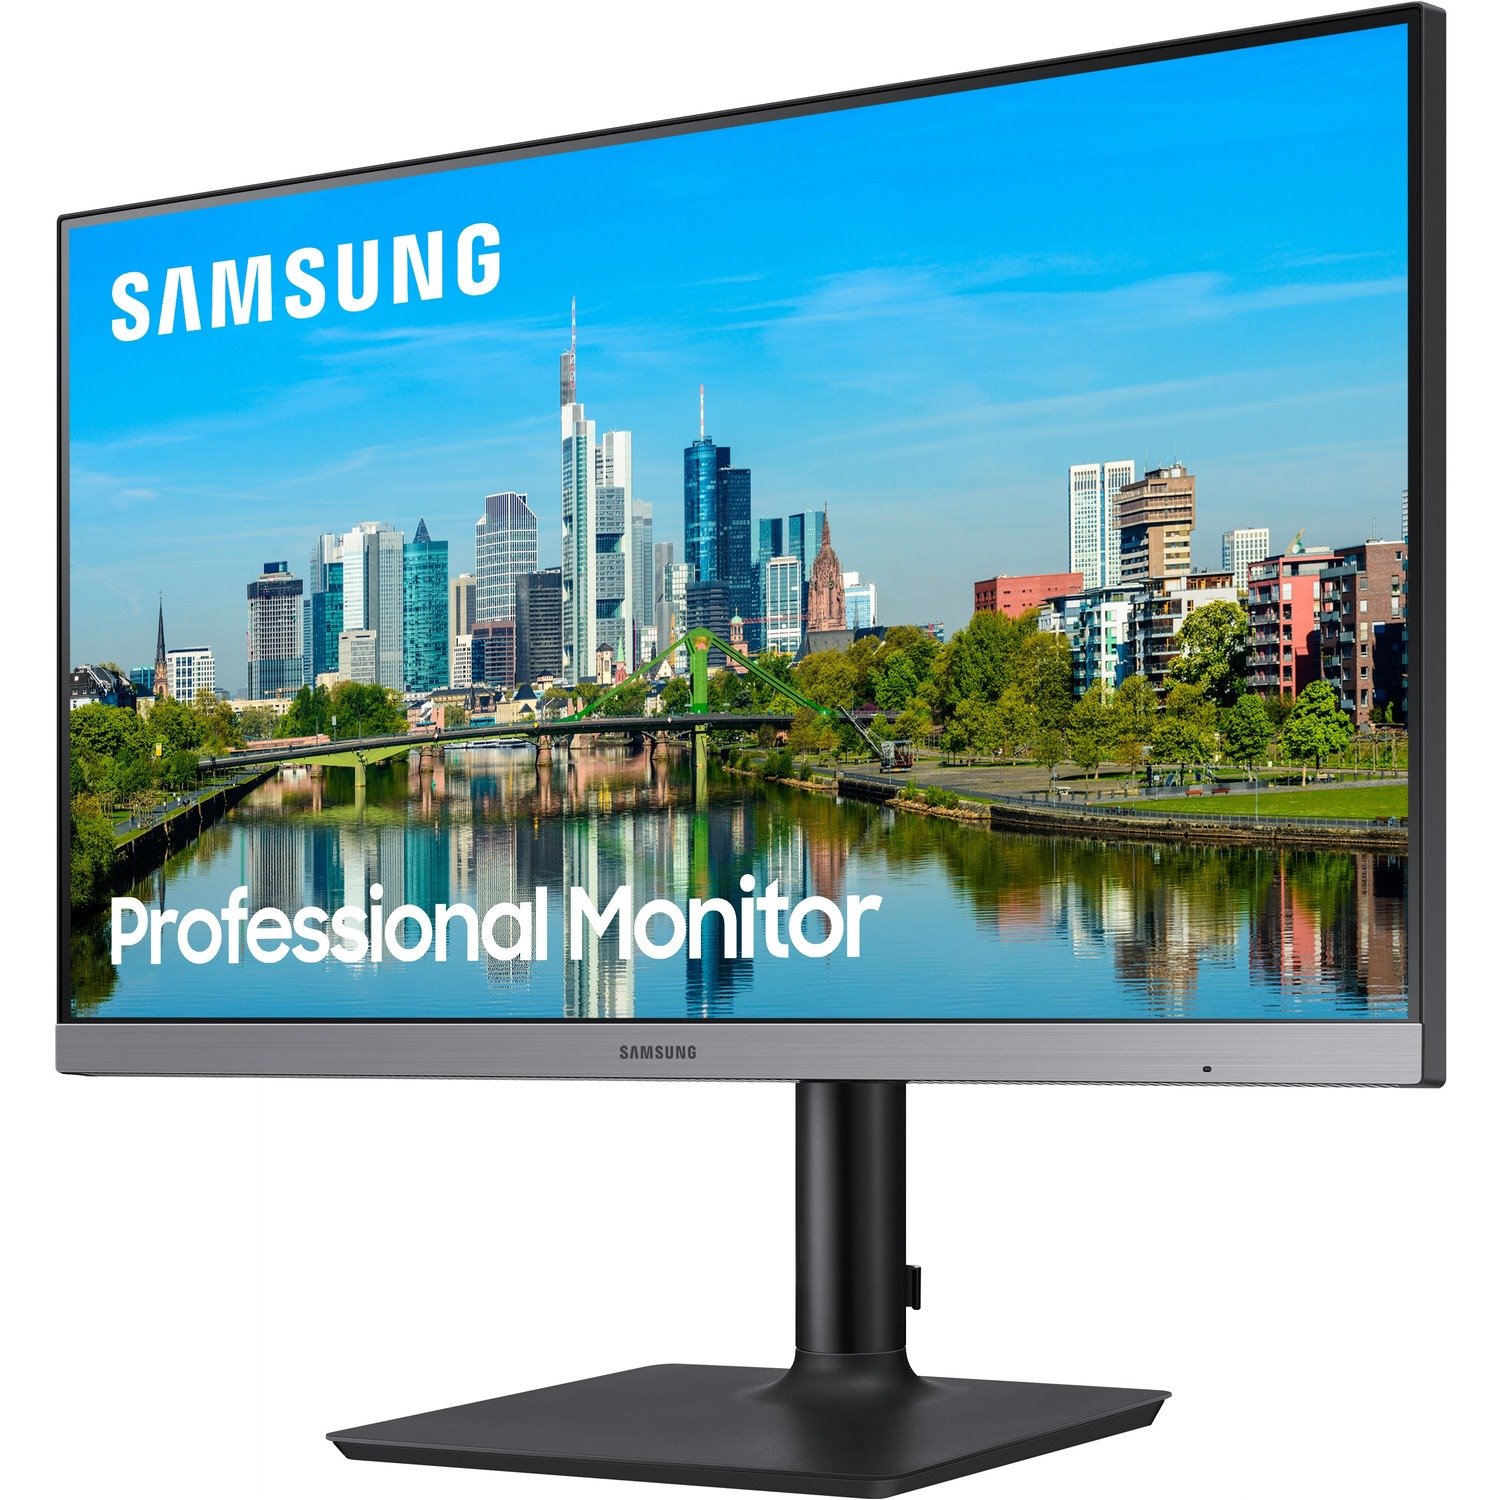 Samsung F24T650FYN 24" Full HD LED LCD Monitor - 16:9 - Dark Blue Gray